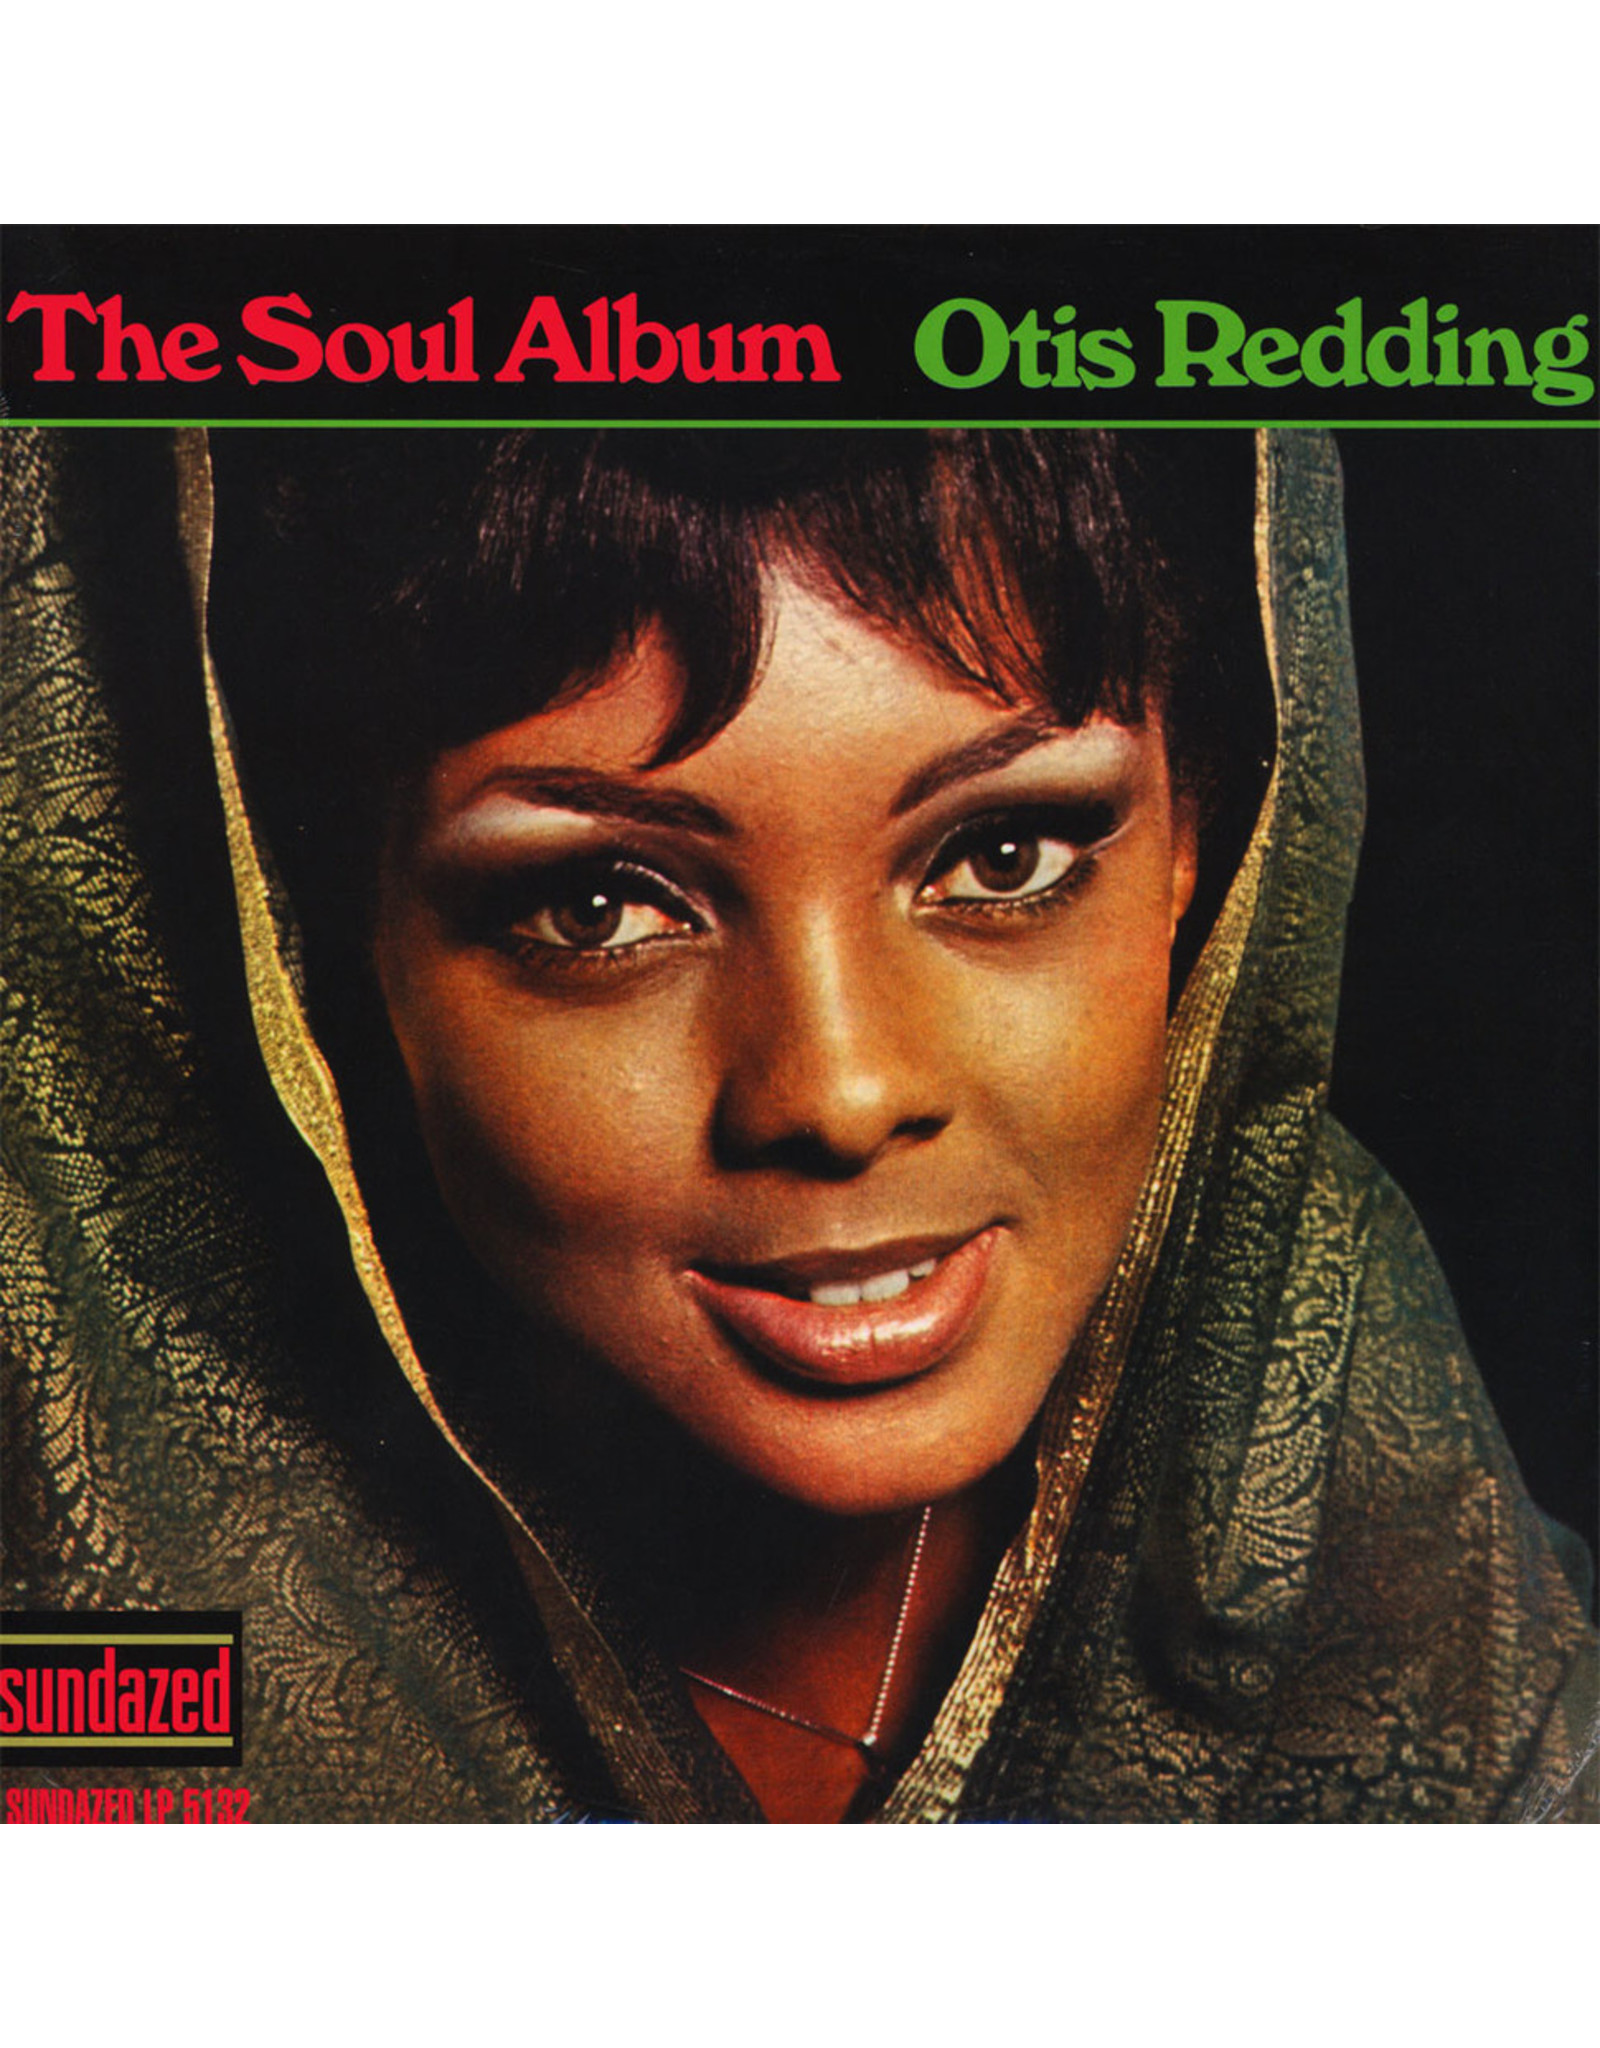 Otis Redding - The Soul Album (Mono)